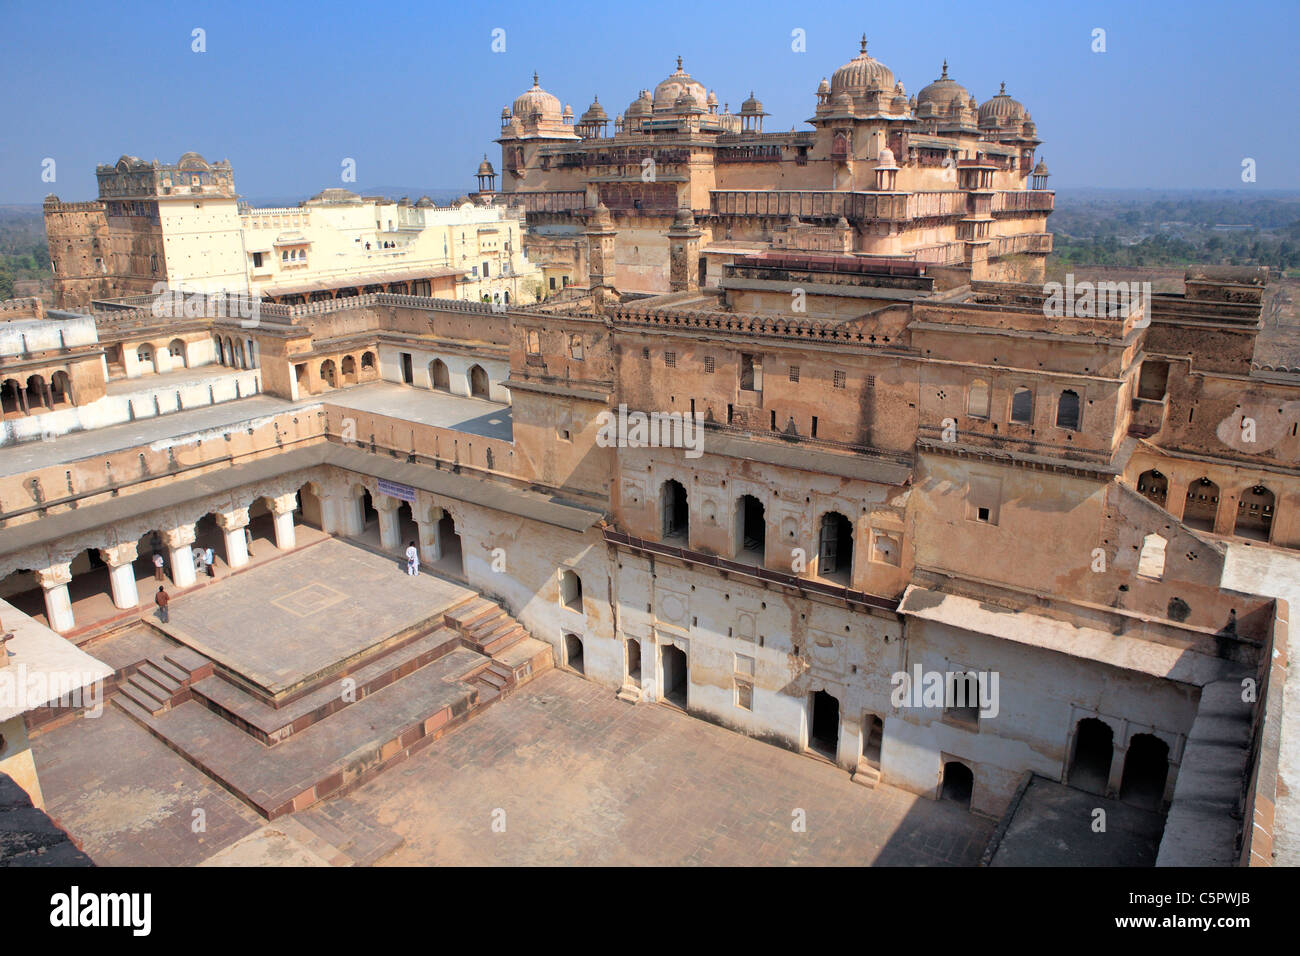 Ram Raja palace (fine XVI sec.)., in background - Jahangiri mahal (inizio XVII C.), Orchha, Madhya Pradesh, India Foto Stock